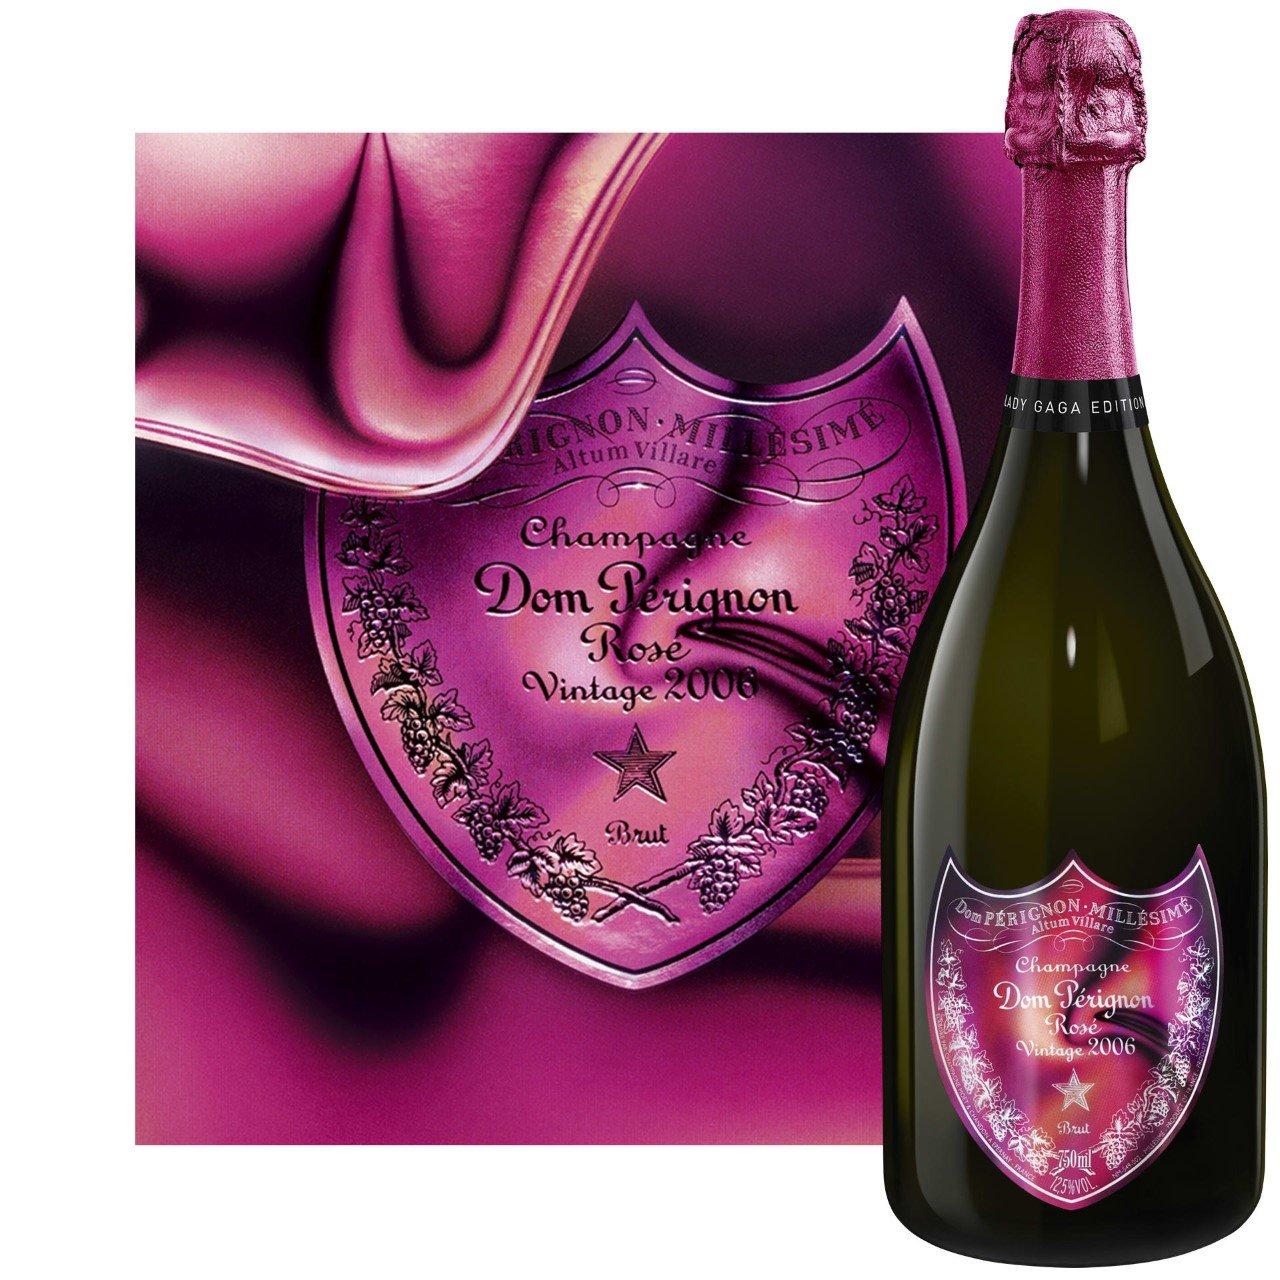 Champagne Dom Pérignon Rosé x Lady Gaga 2006